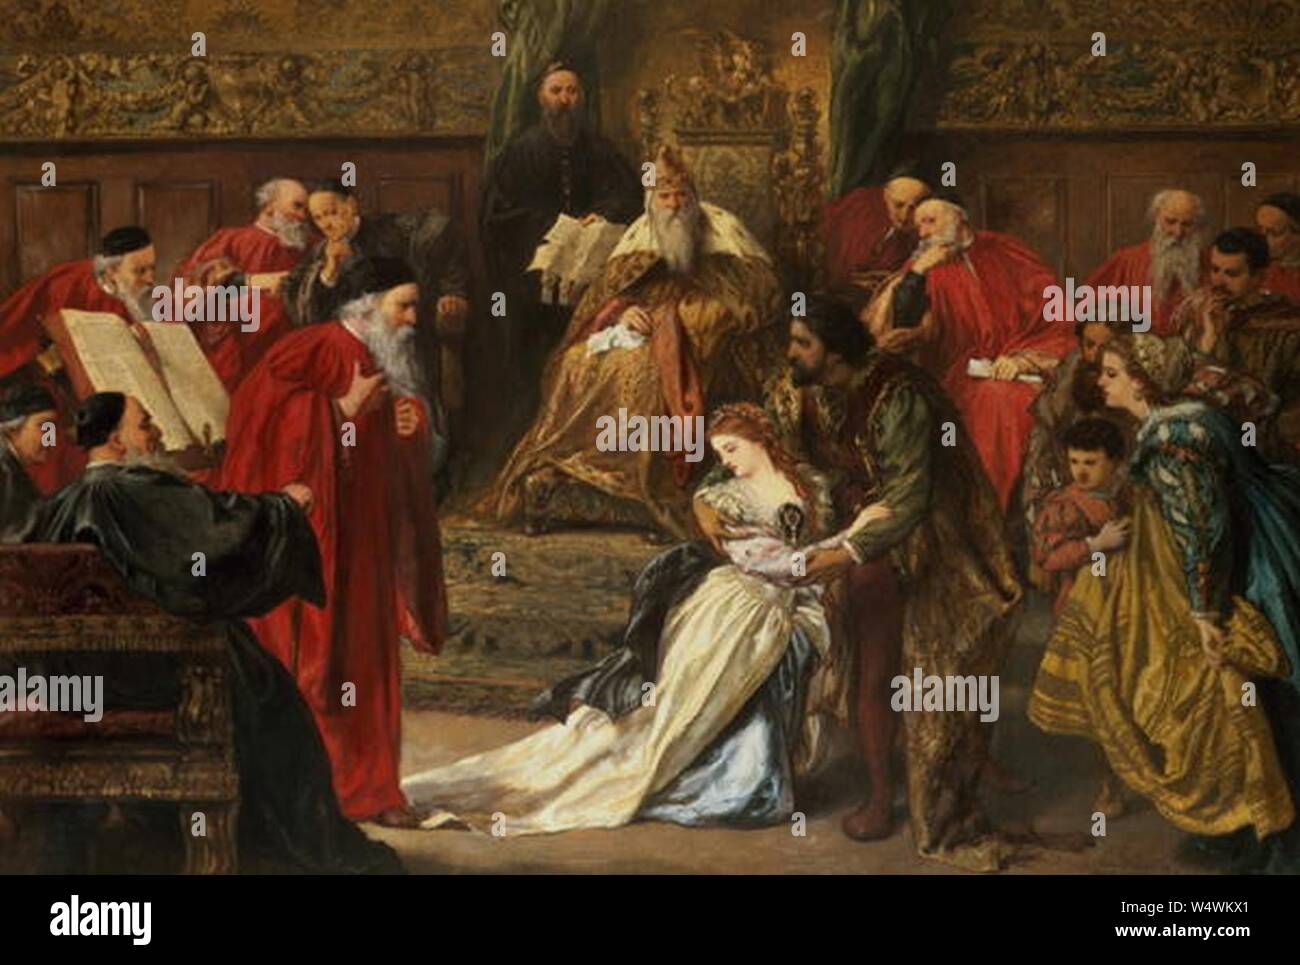 Cordelia-in-the-Court-of-King-Lear-1873-Sir-John-Gilbert. Stock Photo